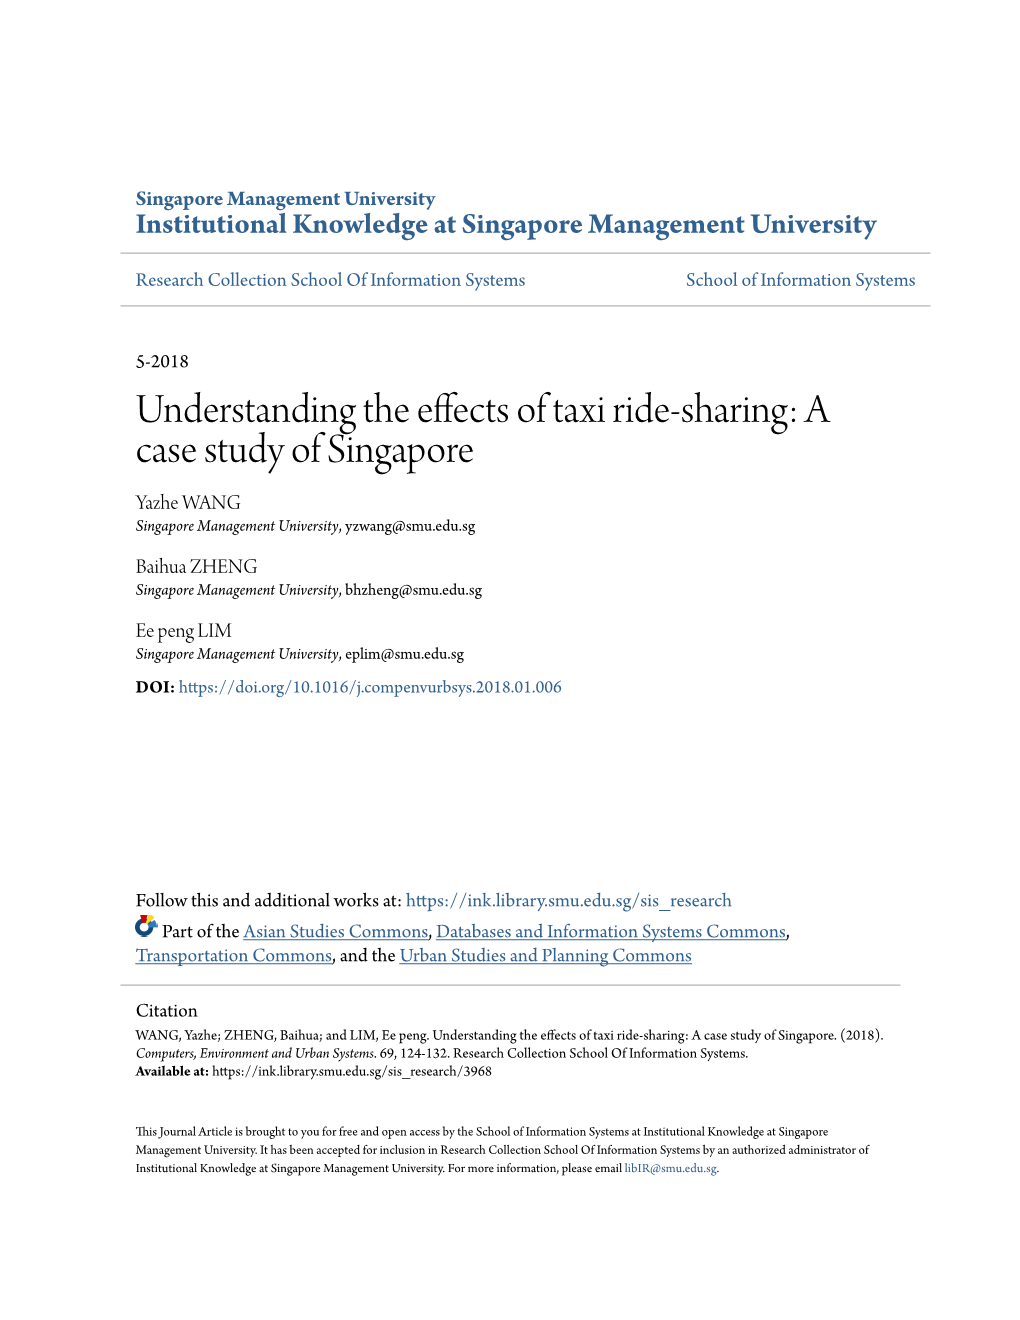 Understanding the Effects of Taxi Ride-Sharing: a Case Study of Singapore Yazhe WANG Singapore Management University, Yzwang@Smu.Edu.Sg